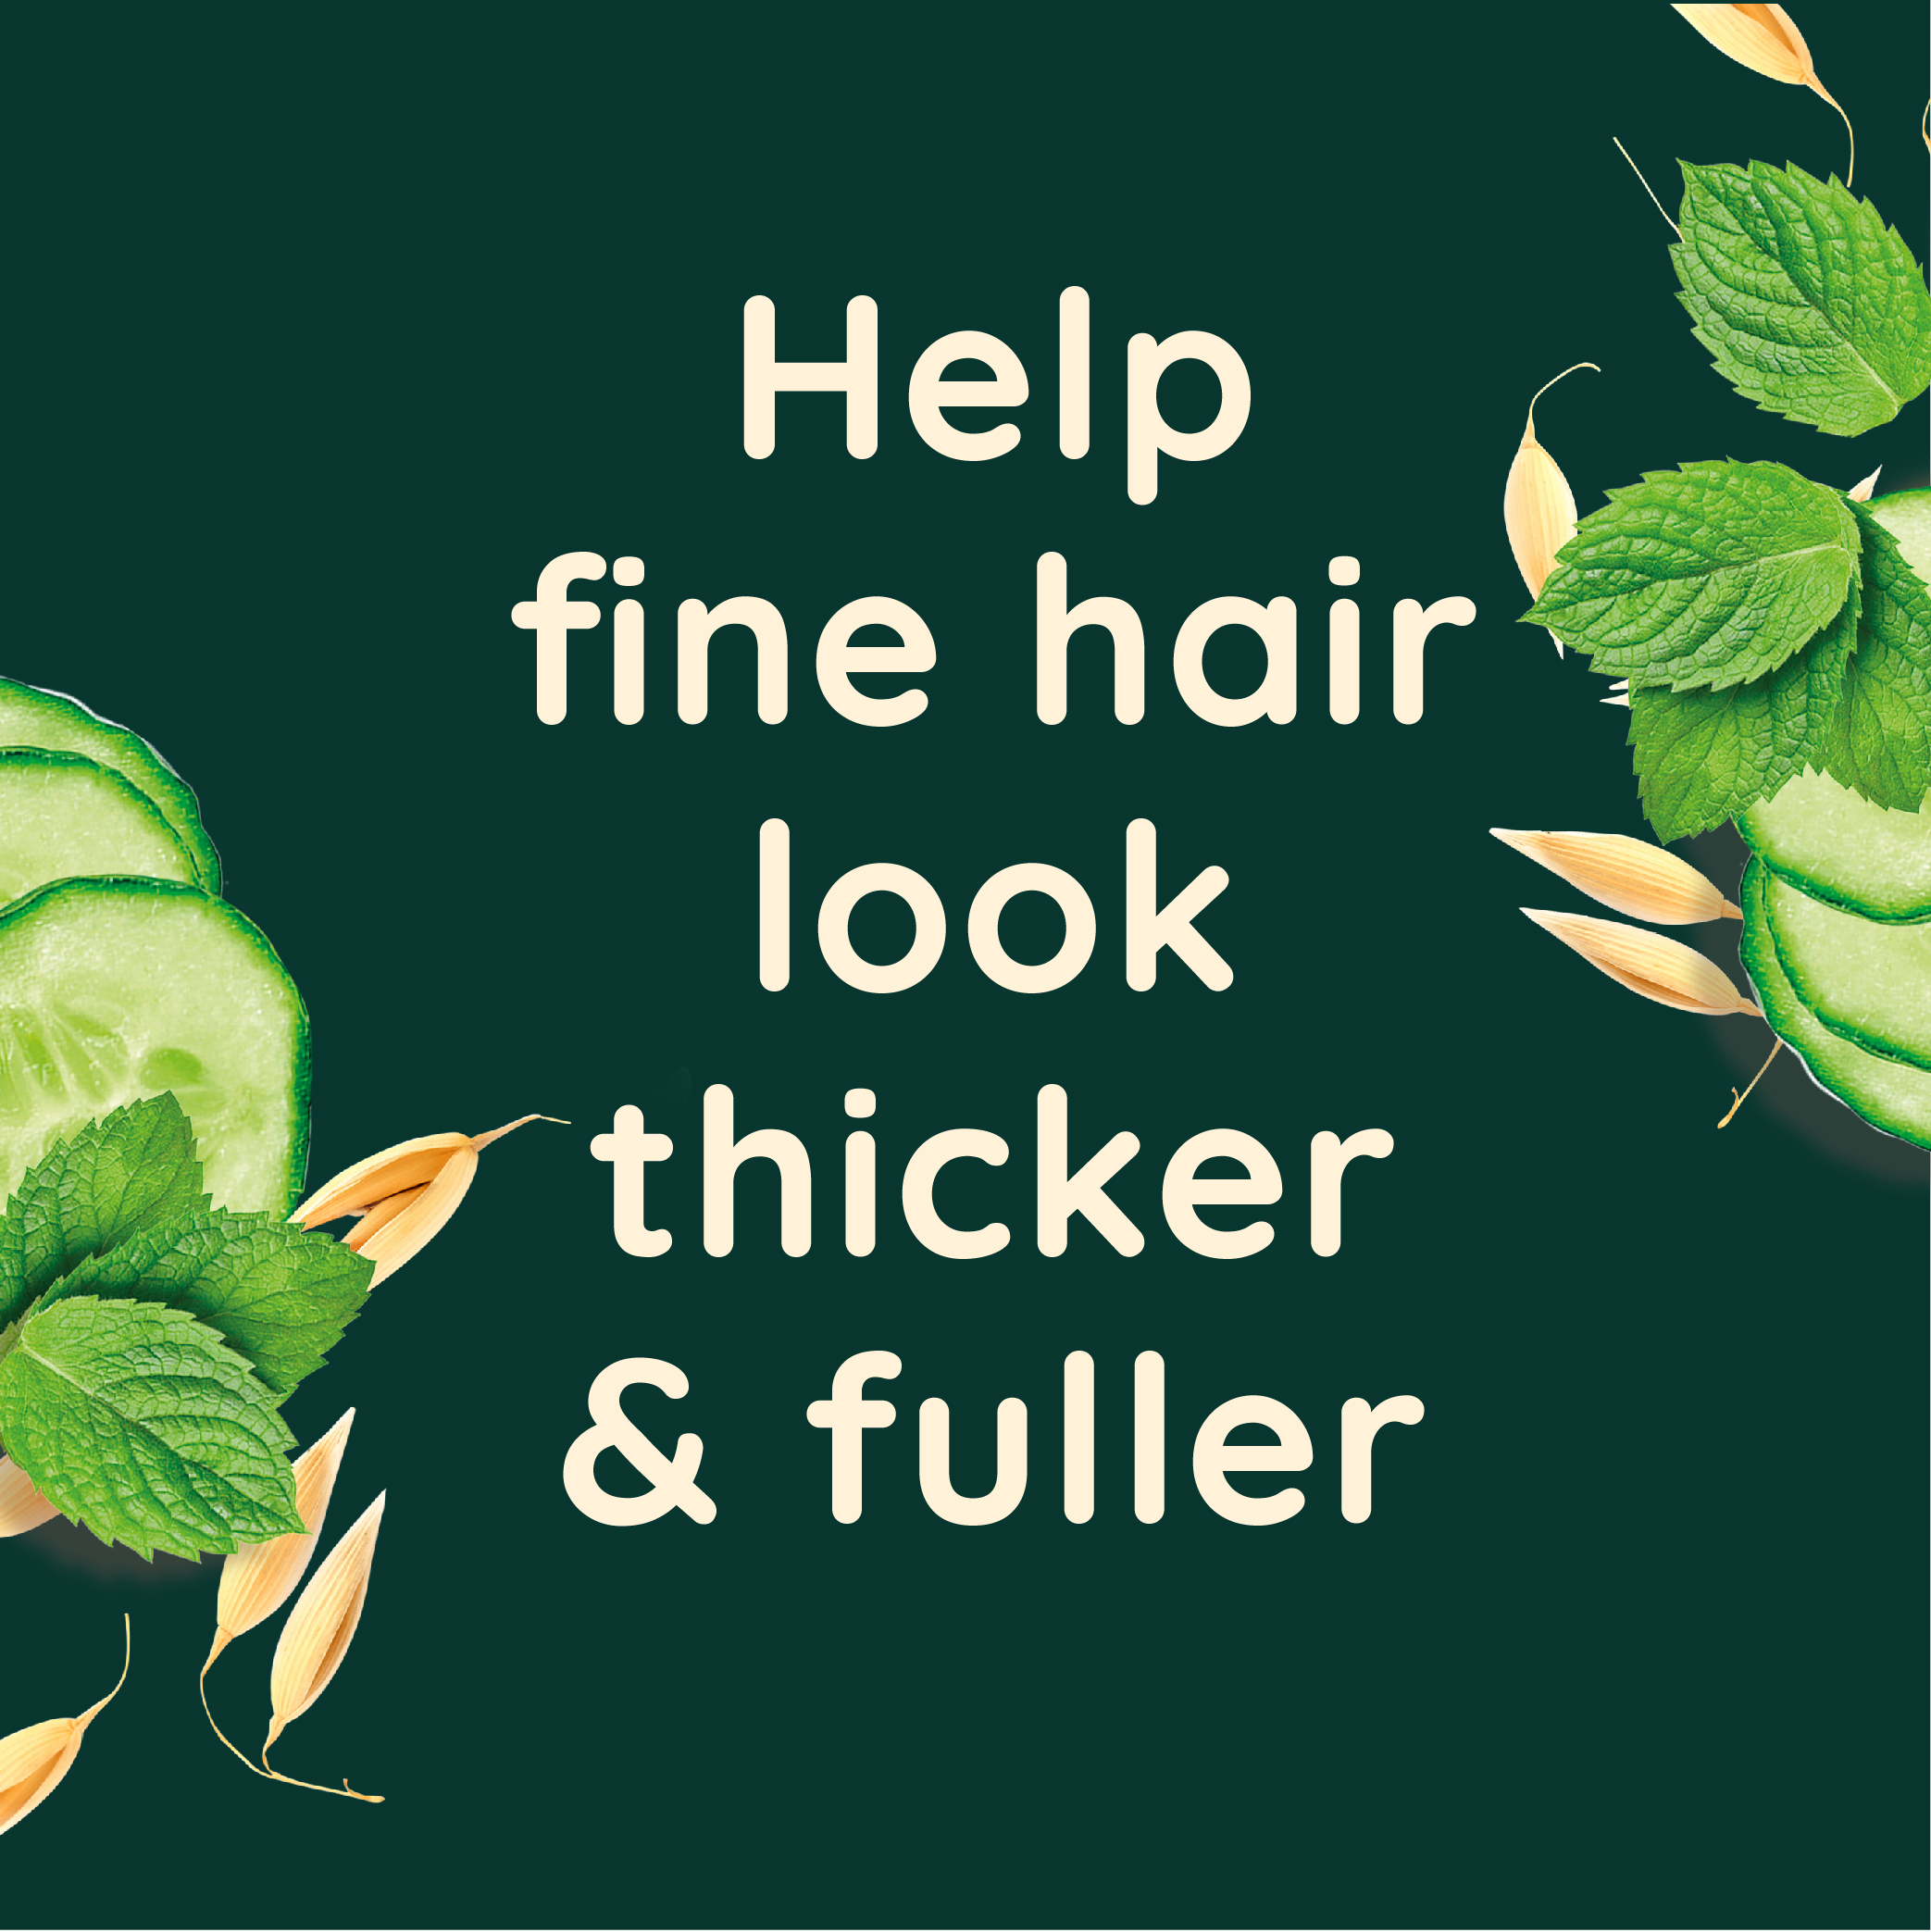 Help fine hair look thicker & fuller